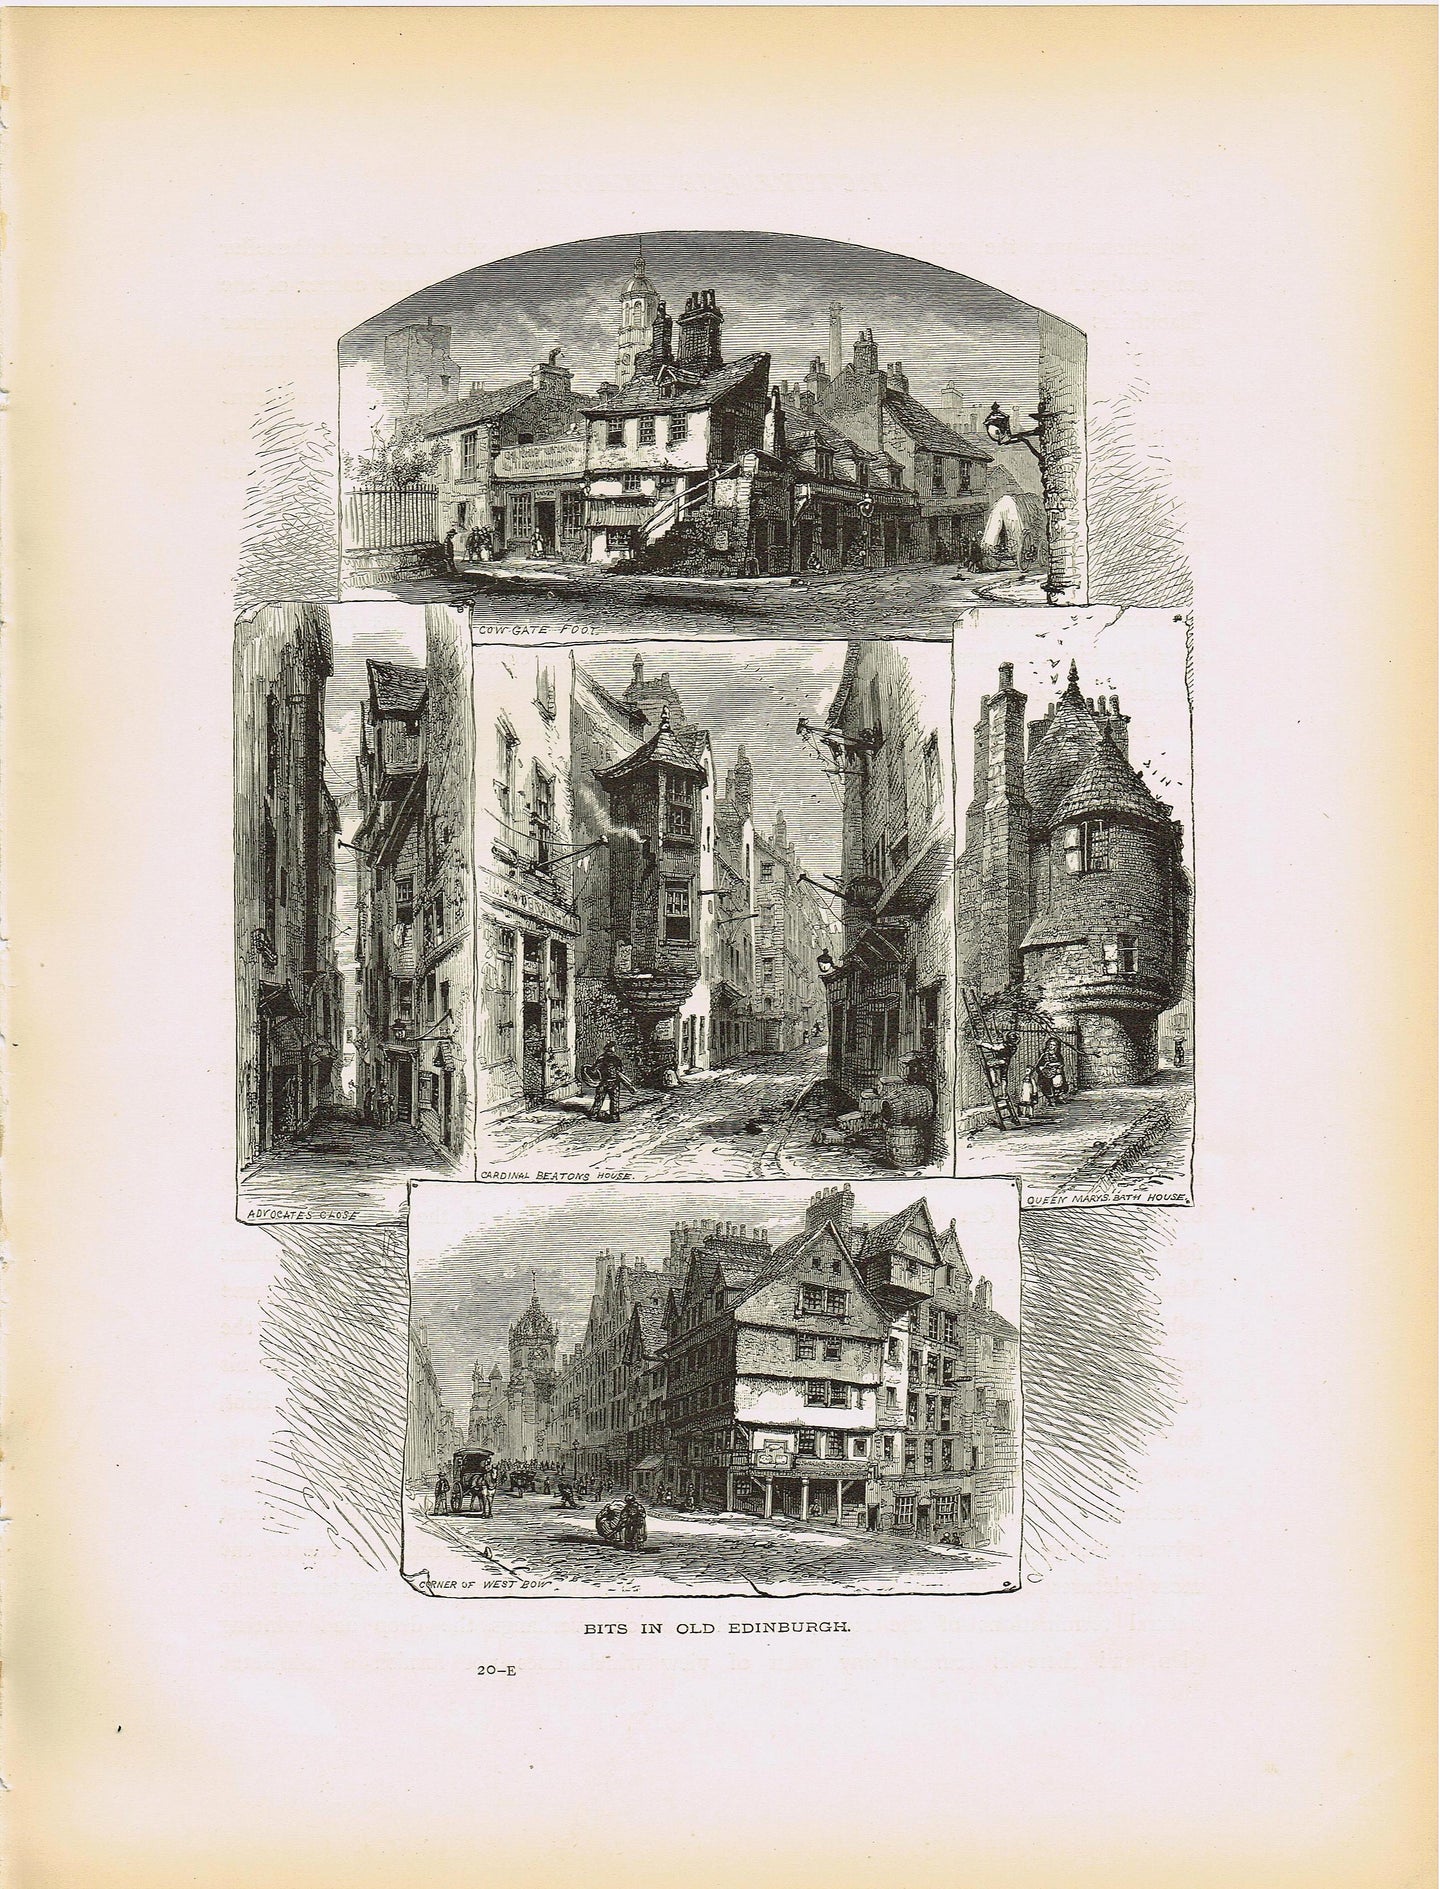 Genuine-Antique-Print-Bits-in-Old-Edinburgh-Scotland--1875-Picturesque-Europe-Maps-Of-Antiquity